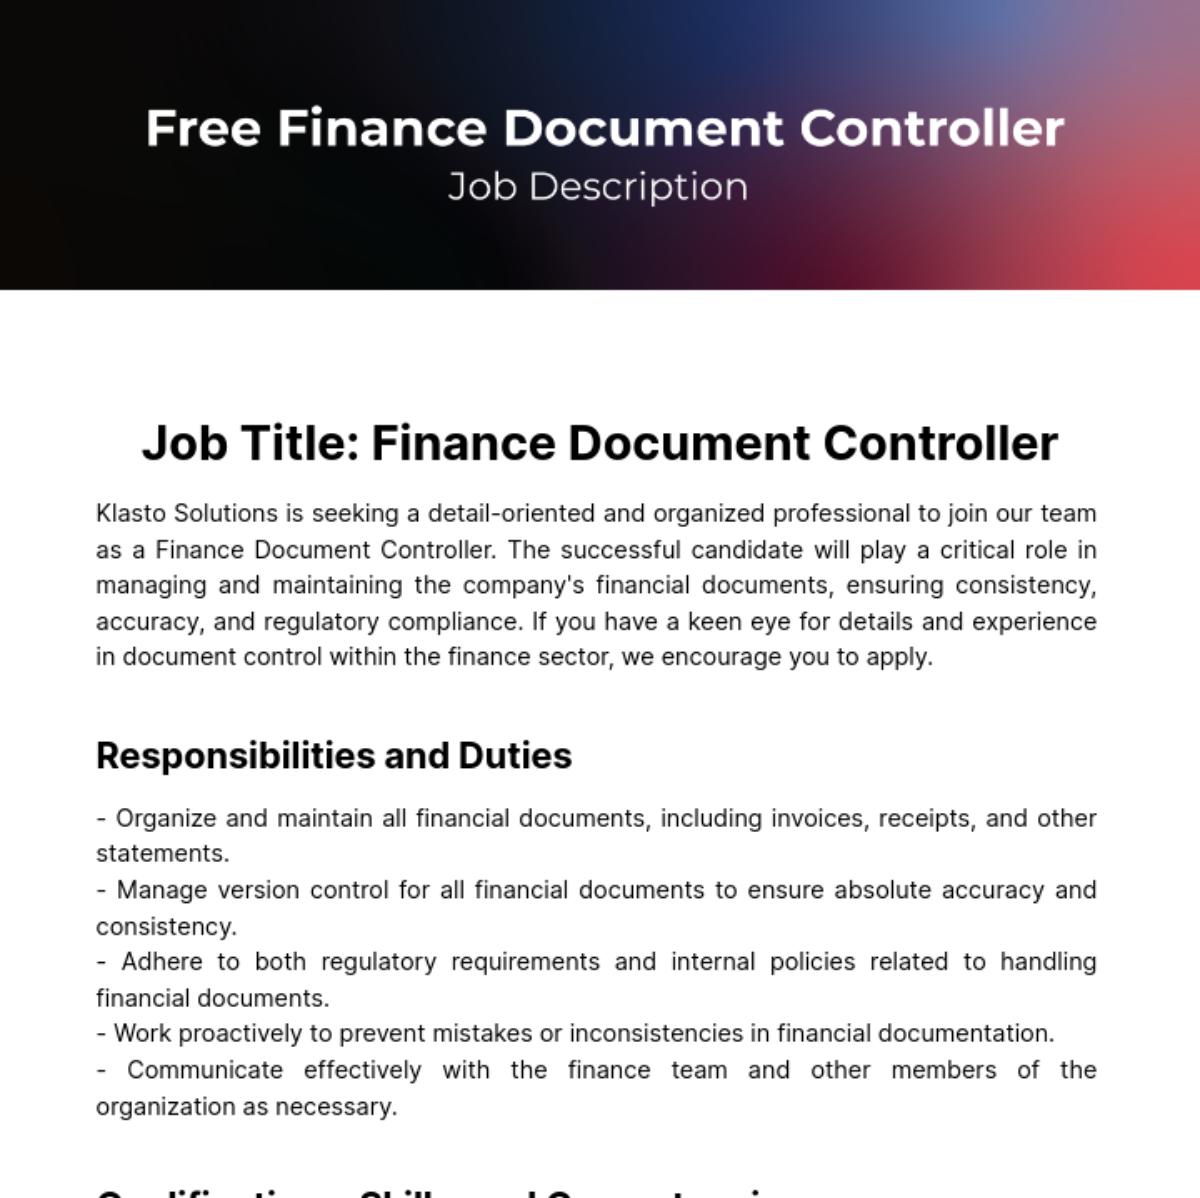 Finance Document Controller Job Description Template